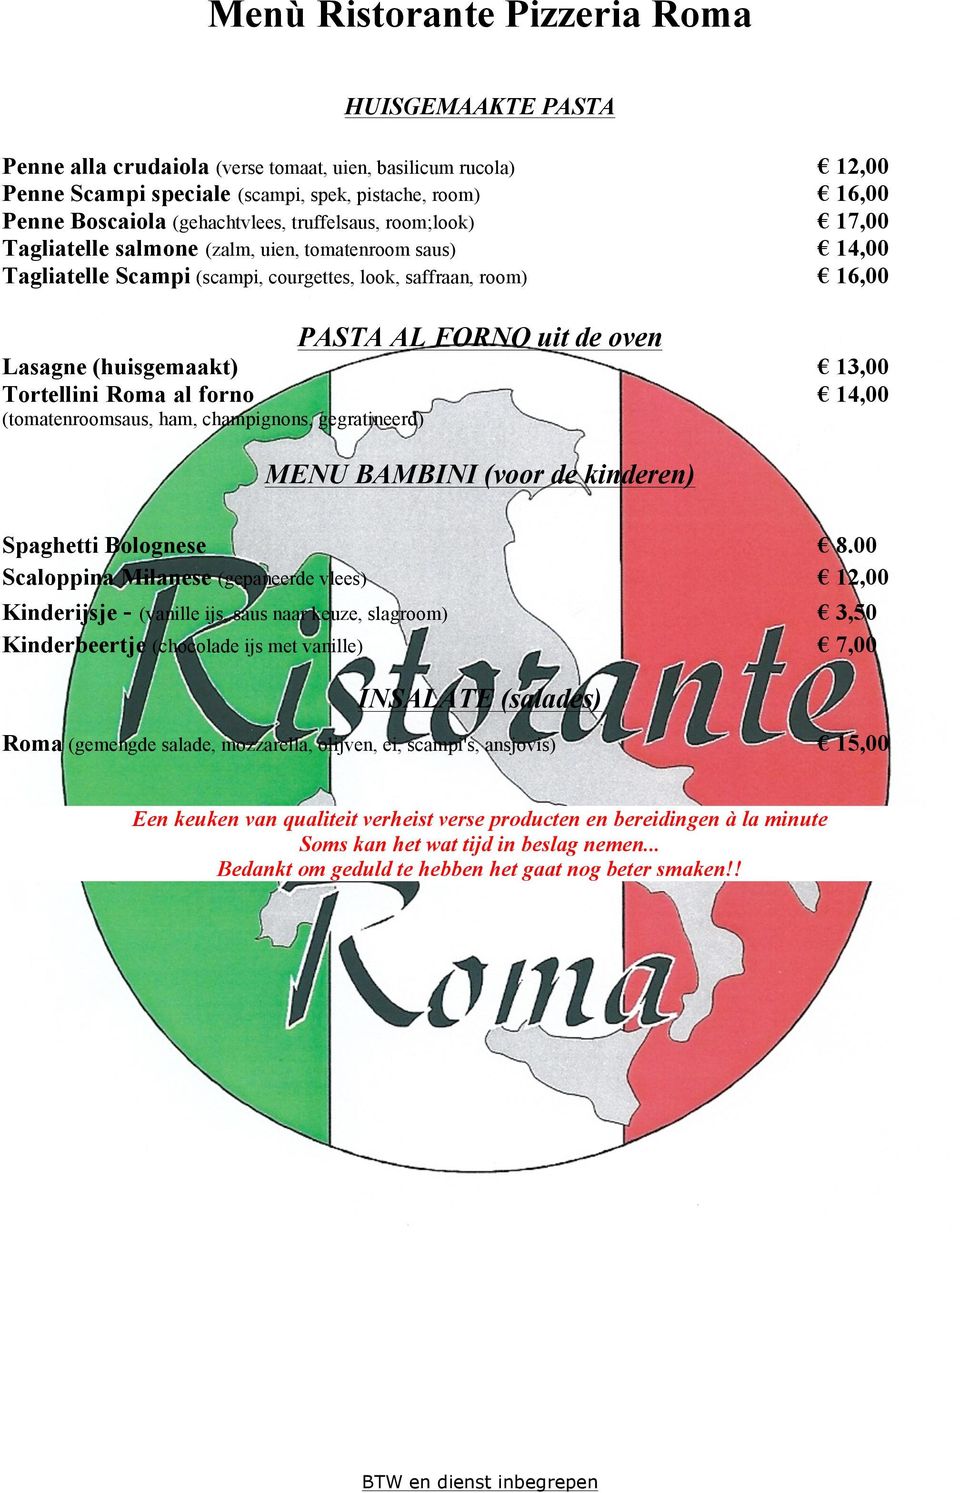 Roma al forno 14,00 (tomatenroomsaus, ham, champignons, gegratineerd) MENU BAMBINI (voor de kinderen) Spaghetti Bolognese 8.